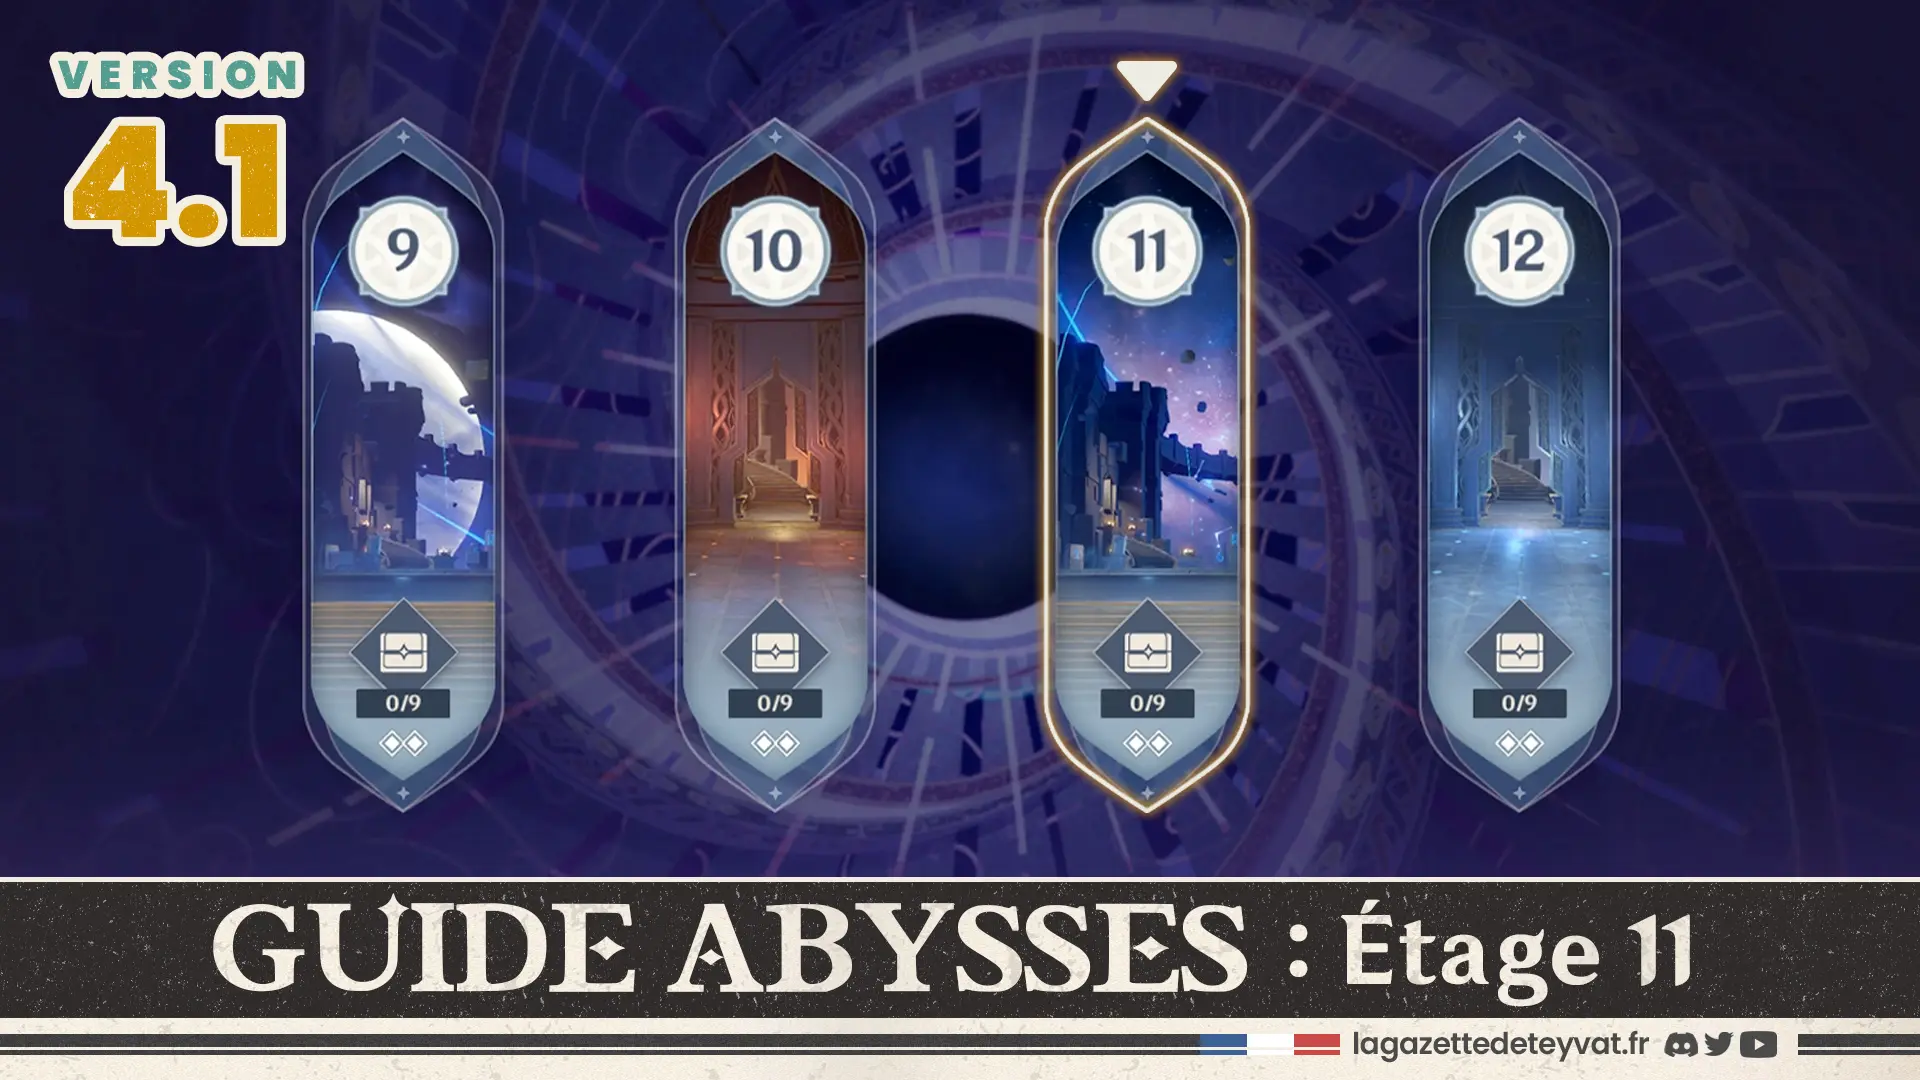 Abysses 4.1 étage 11